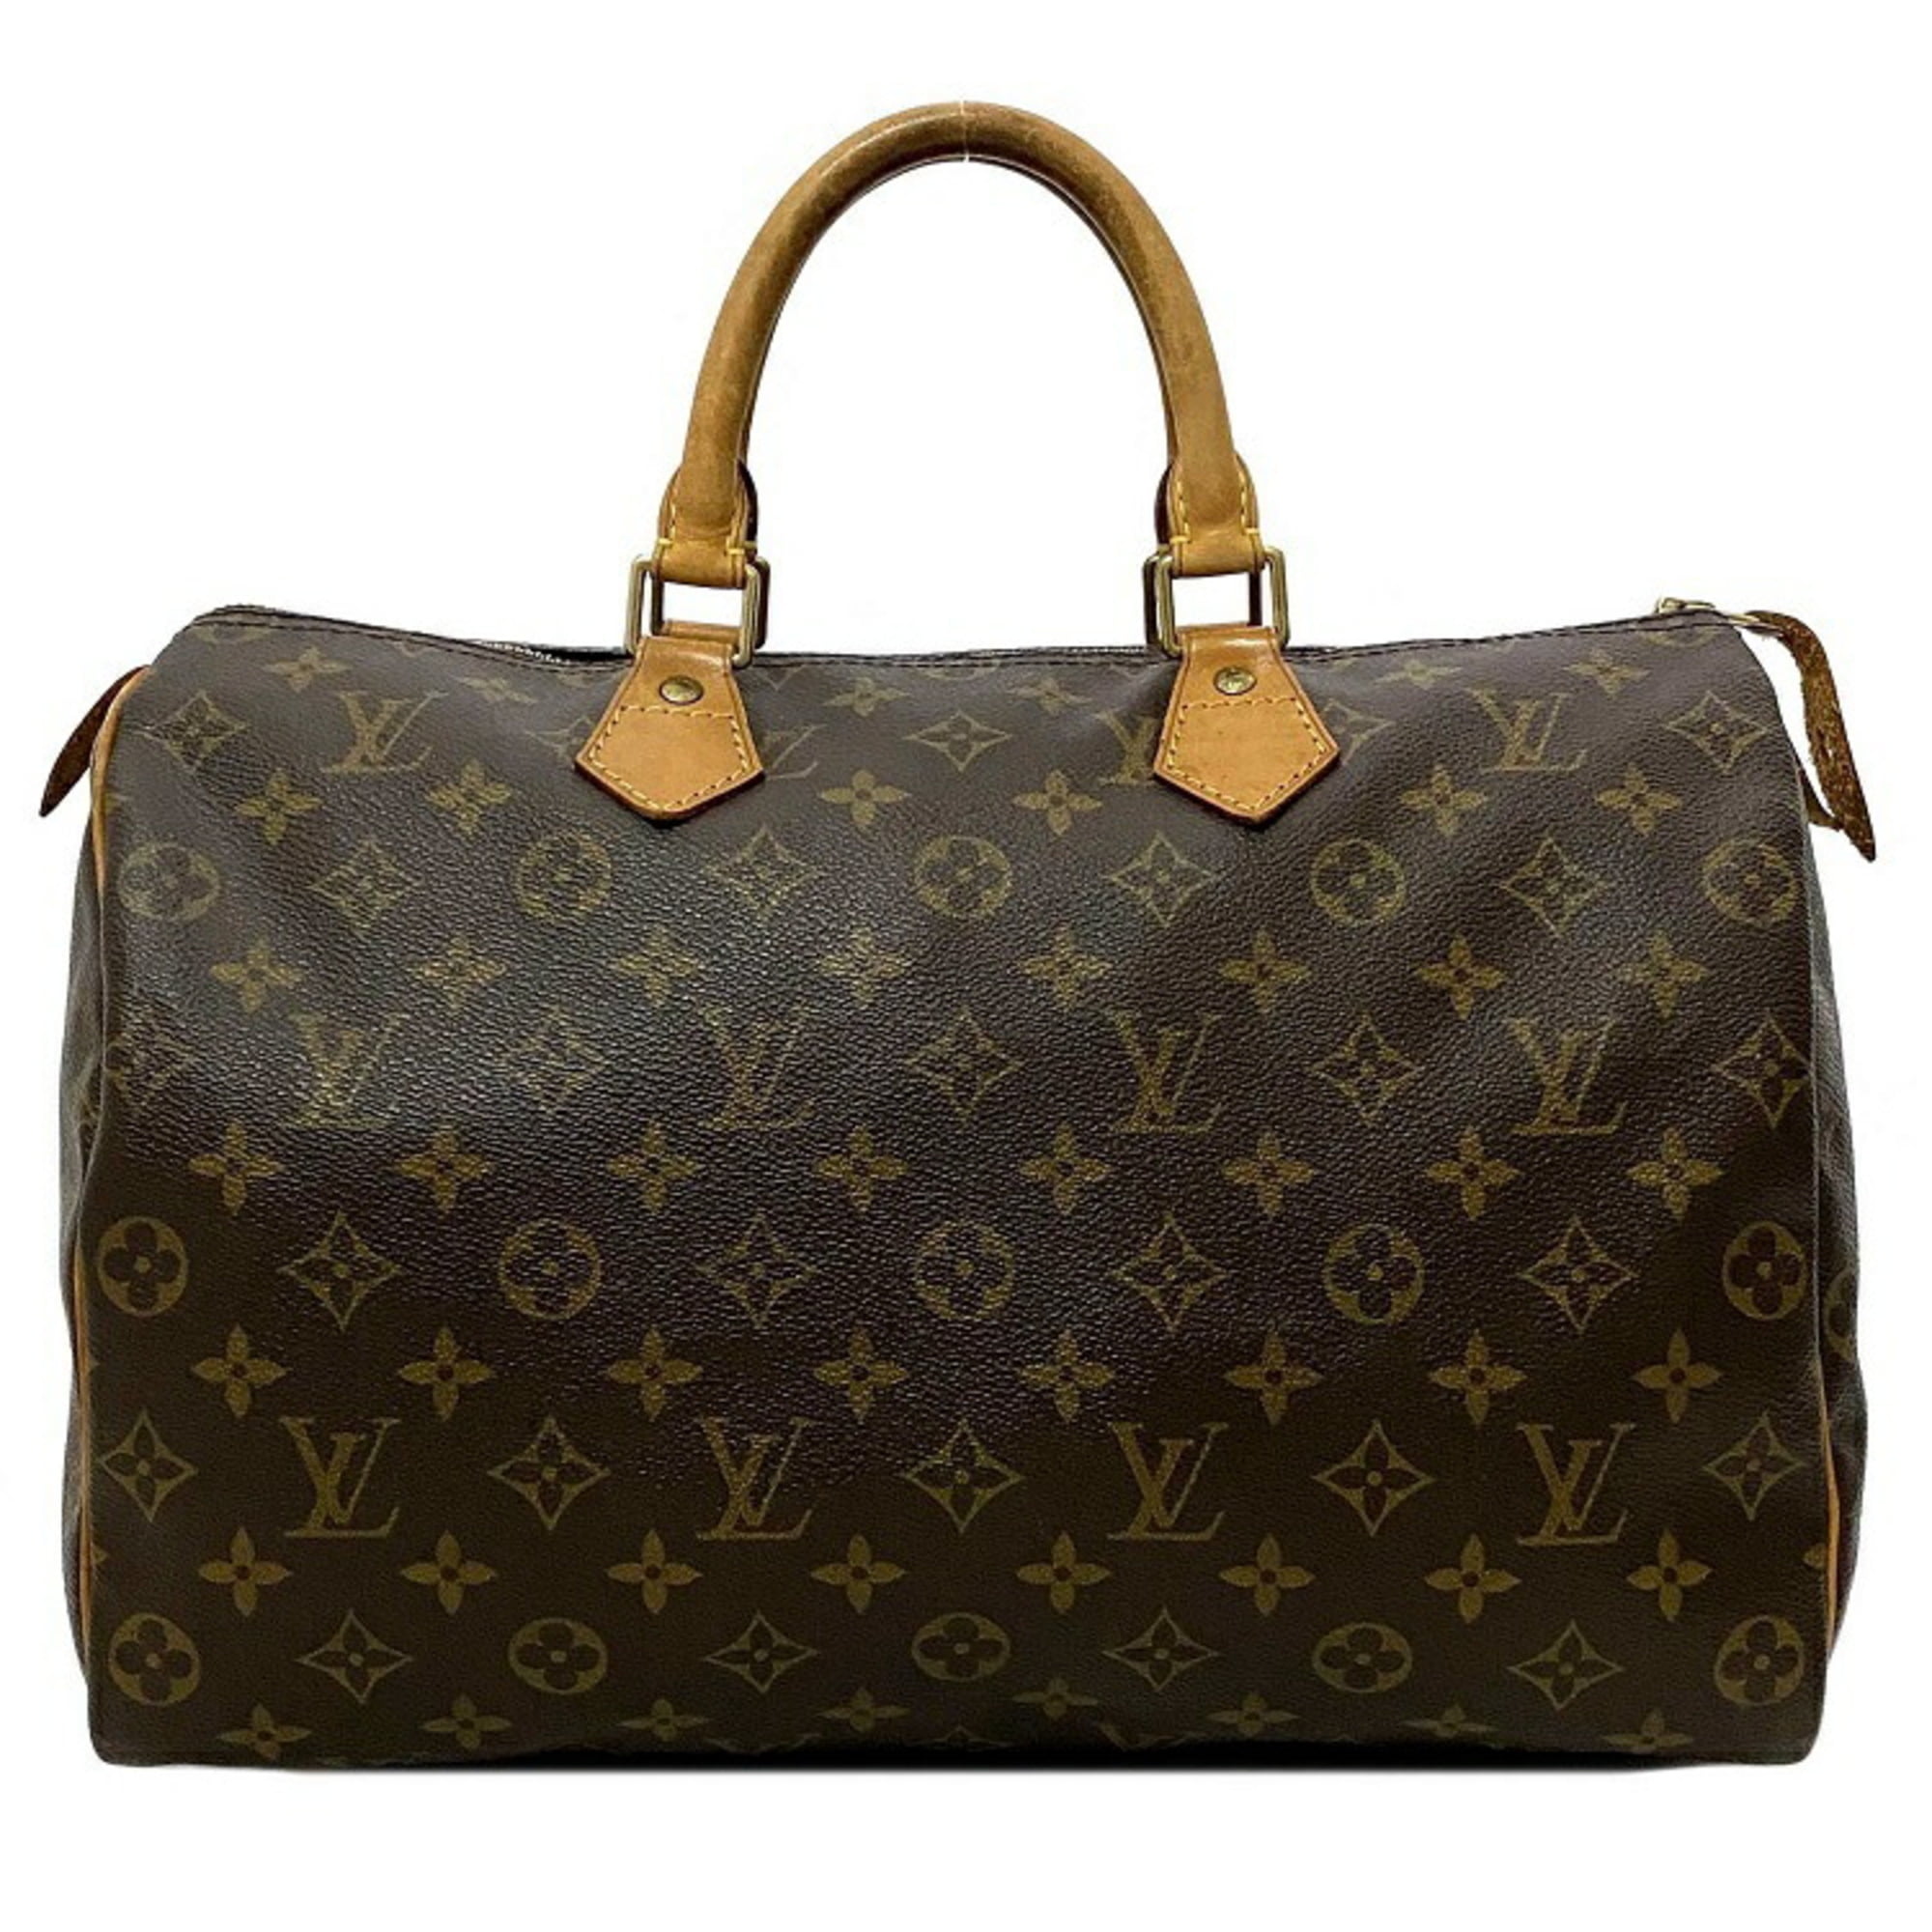 Louis Vuitton - Authenticated Speedy Handbag - Cloth Multicolour for Women, Very Good Condition